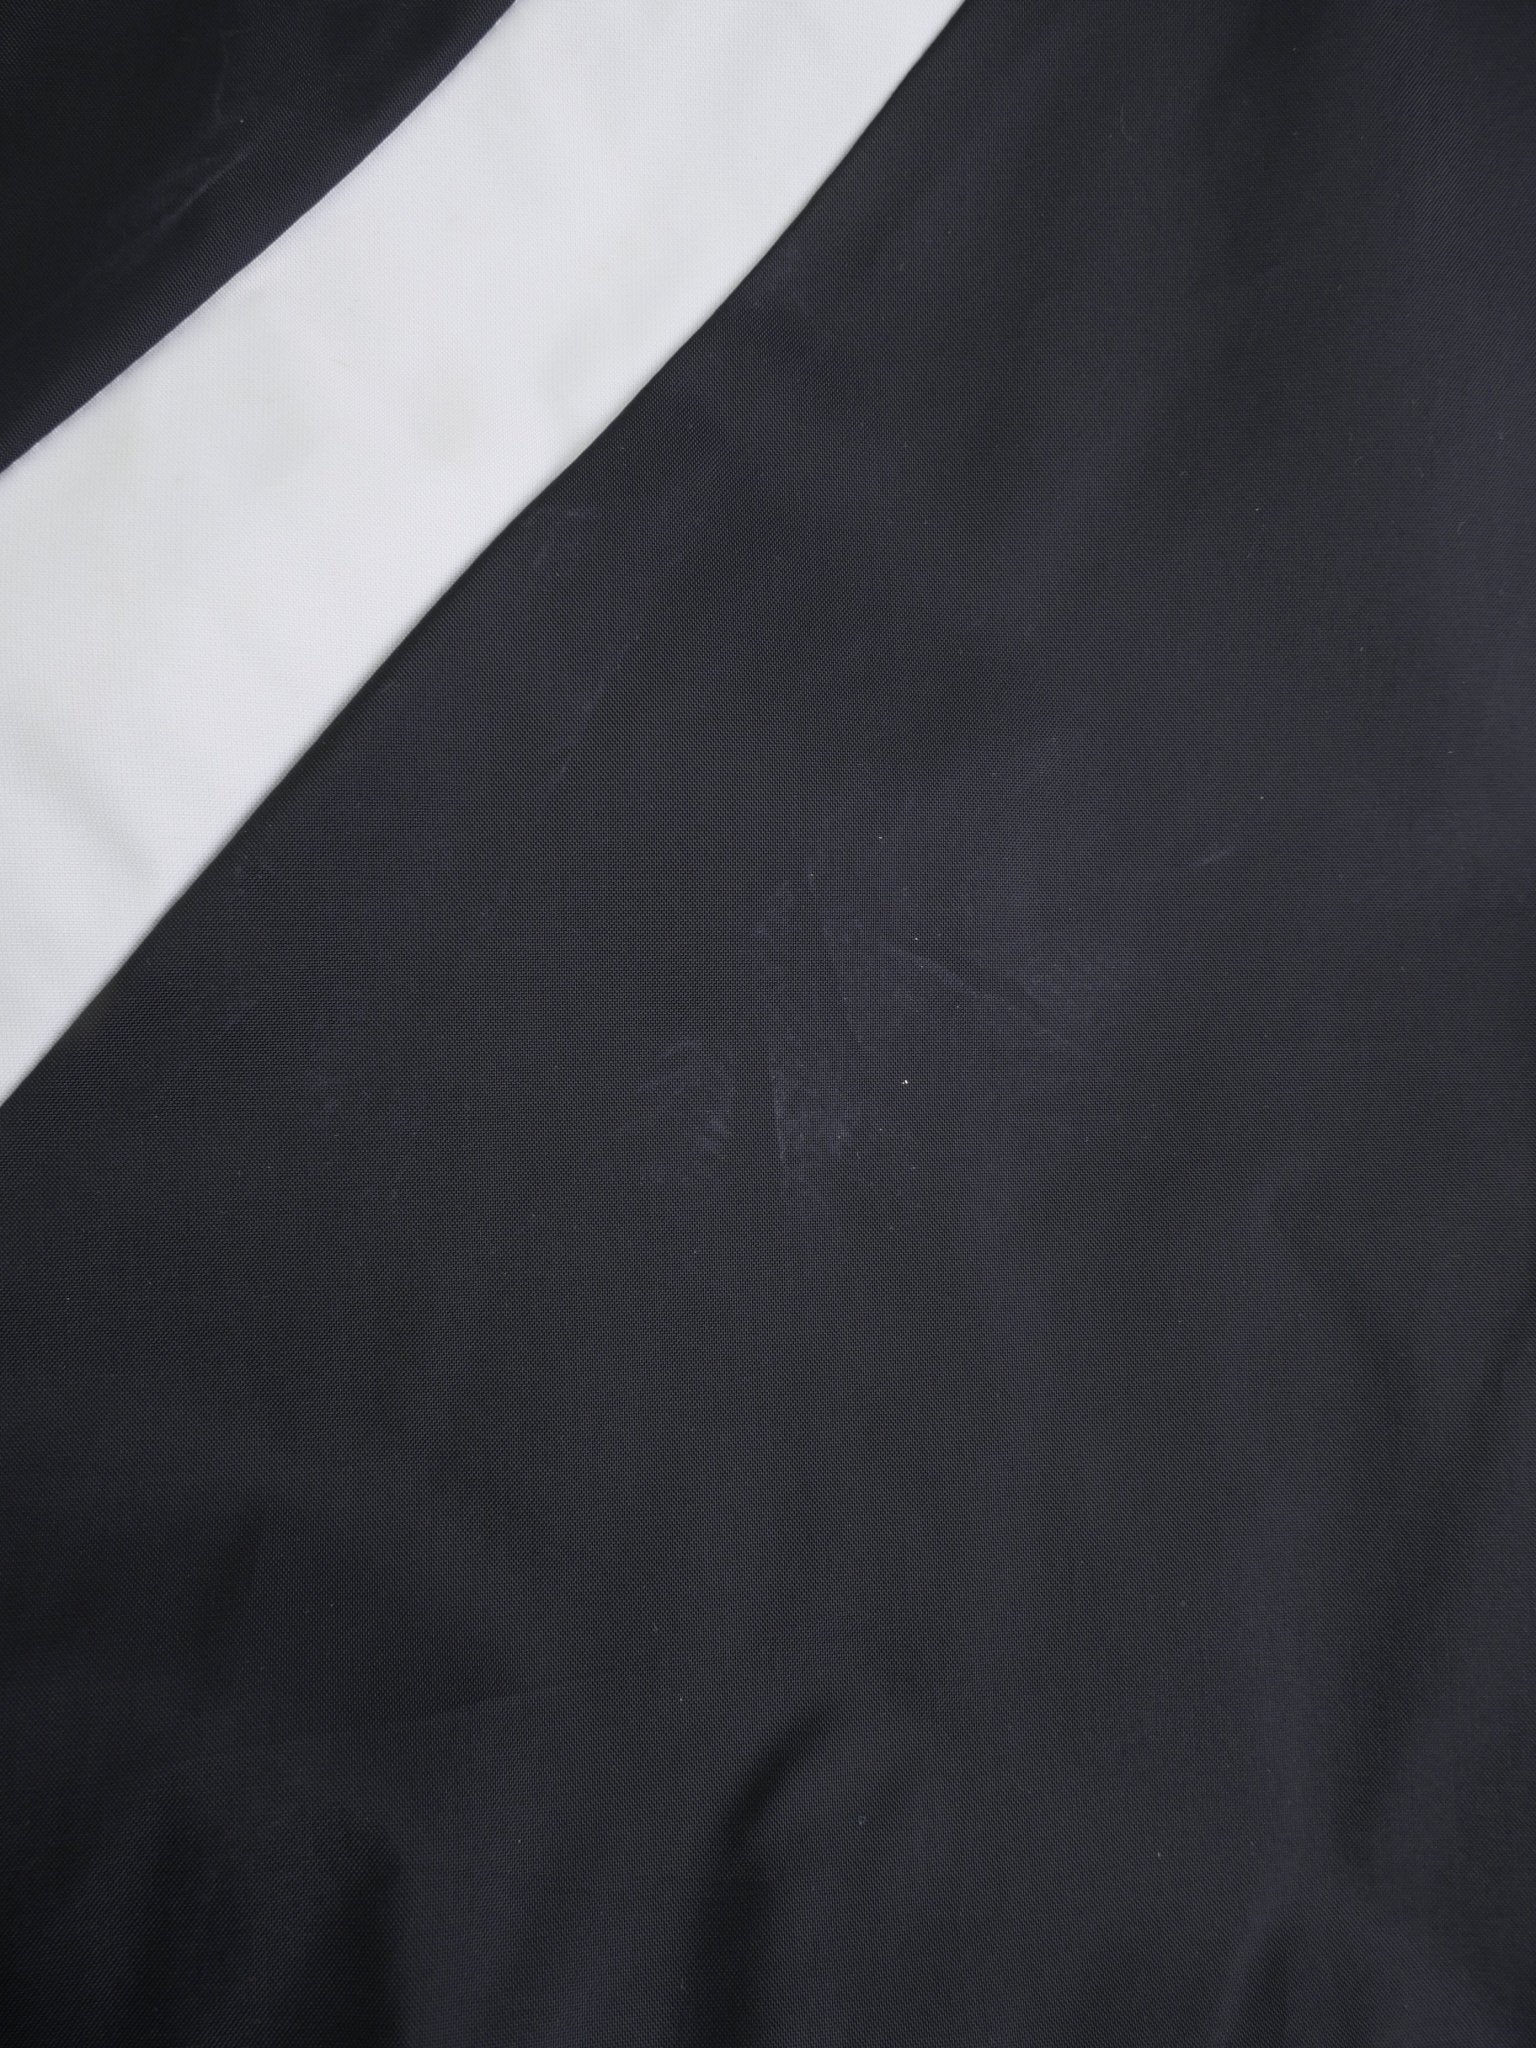 Adidas printed Logo 'Plymouth Argyle FC' Windbreaker - Peeces